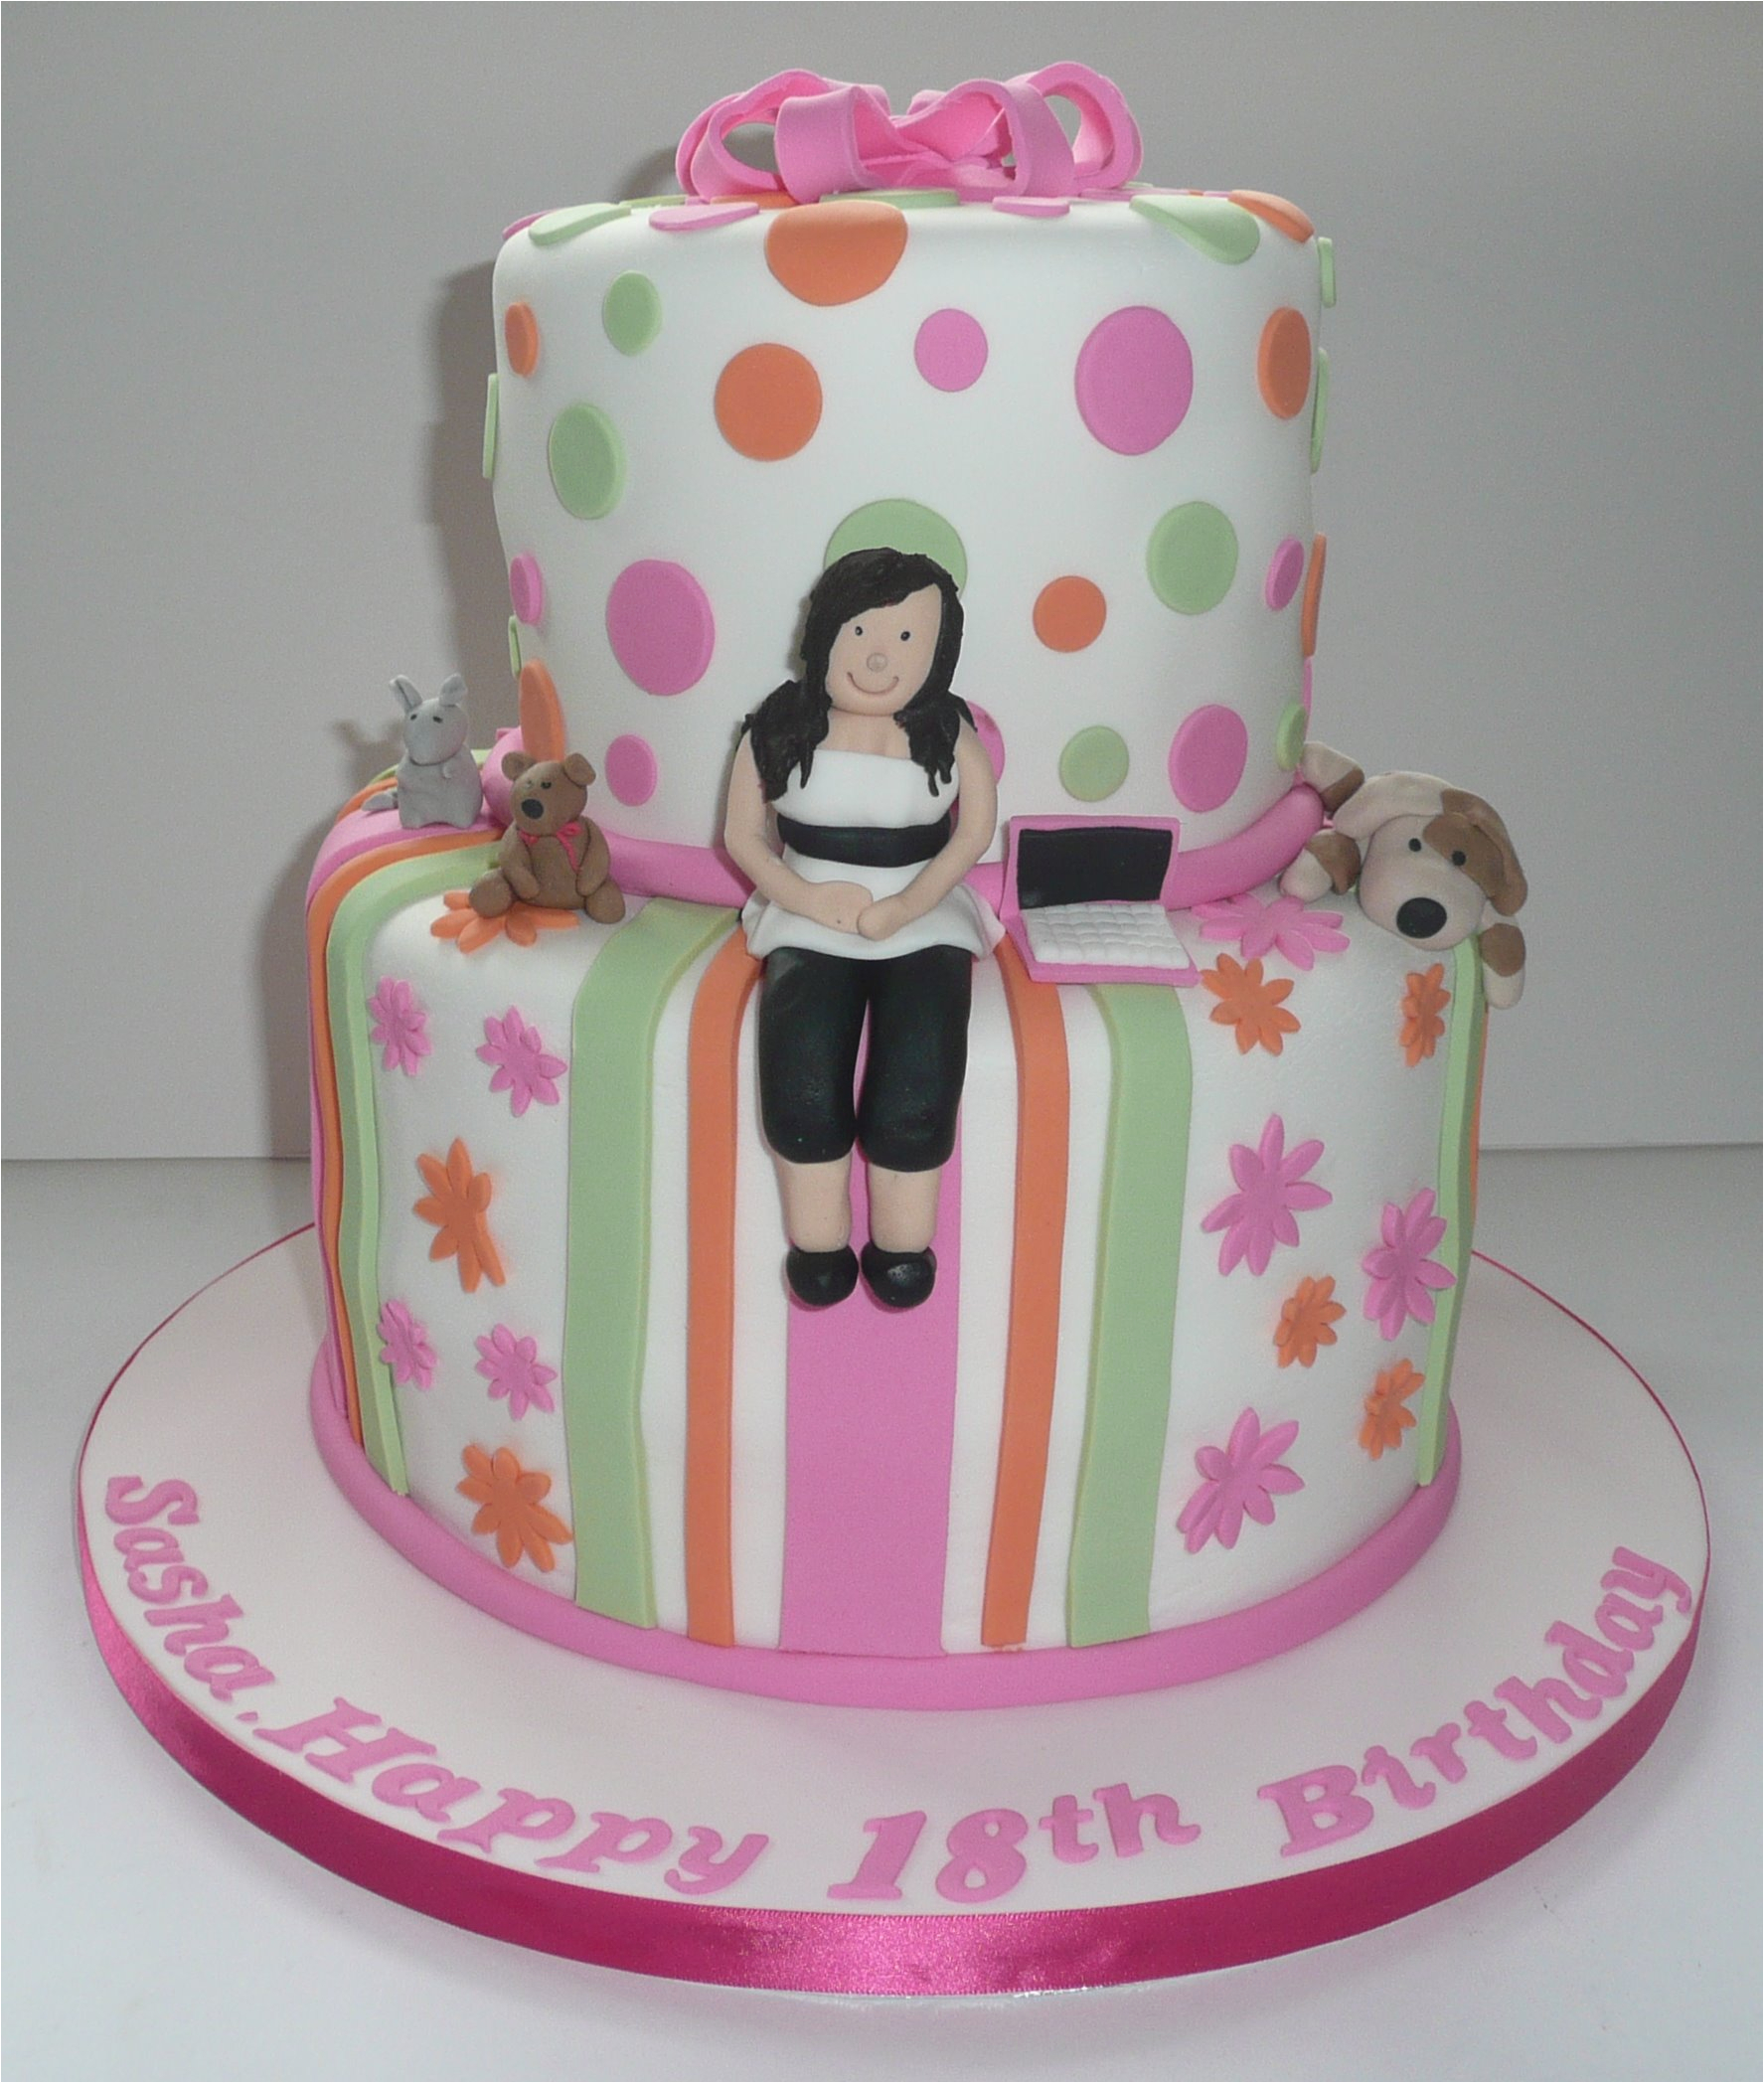 Cake Ideas for 18th Birthday Girl | BirthdayBuzz